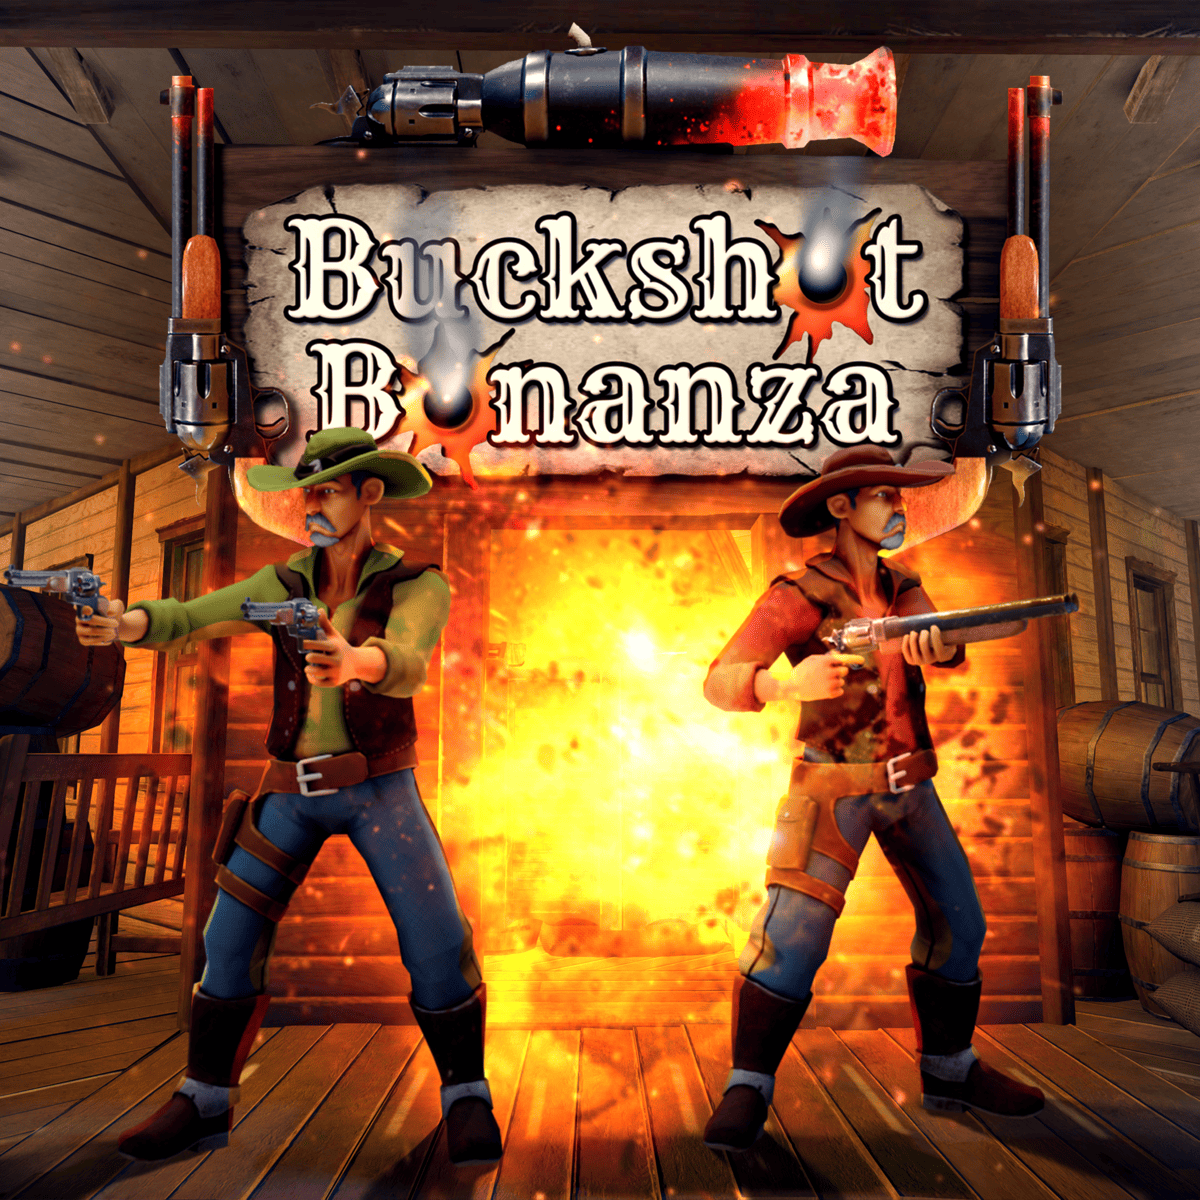 LOGO Buckshot Bonanza - Enter the wild west in Buckshot Bonanza. The new free-roam VR shooter from SPREE Interactive.